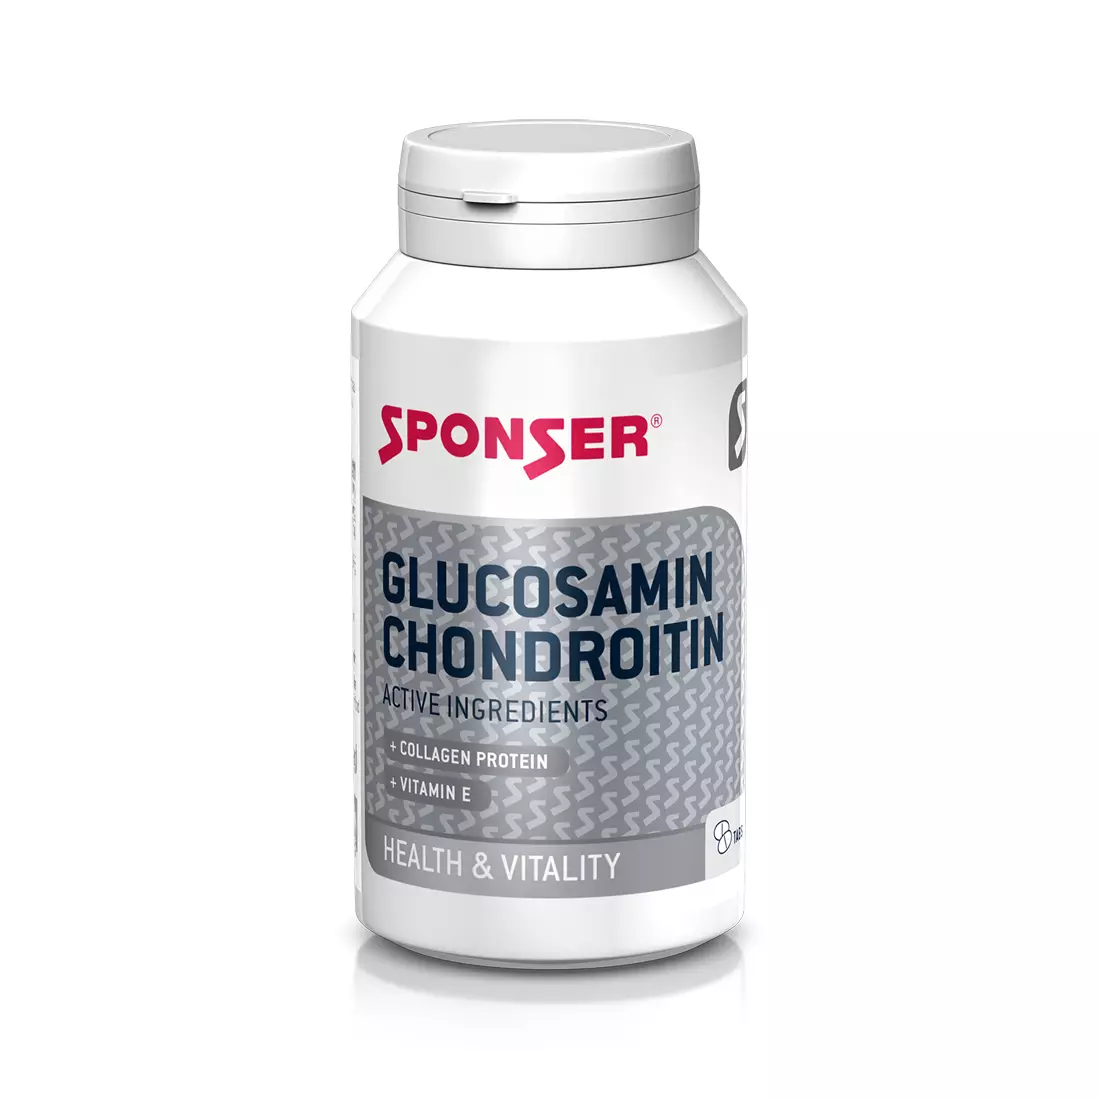 Glucosamine SPONSER GLUCOSAMIN CHONDROITIN 180 tablets